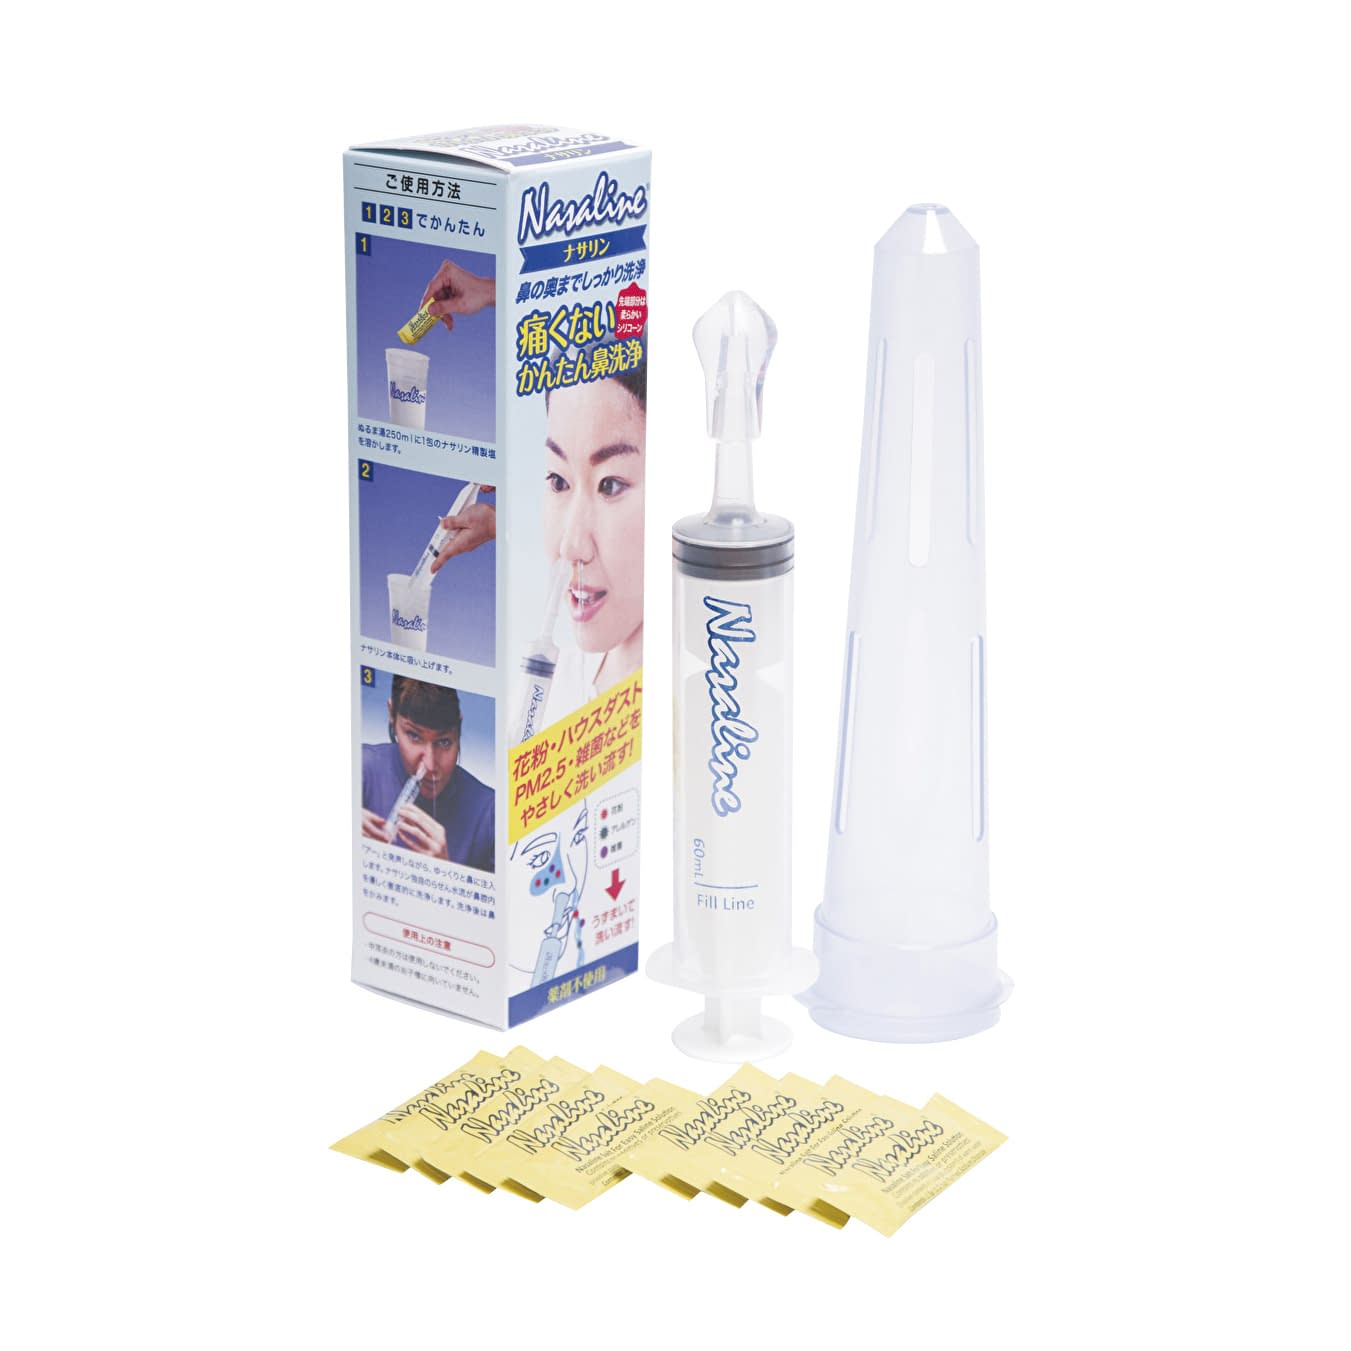 (23-5925-00)鼻腔洗浄器ナサリン（大人用） CA-JP201(60ML) ﾋﾞｸｳｾﾝｼﾞｮｳｷﾅｻﾘﾝ【1本単位】【2019年カタログ商品】